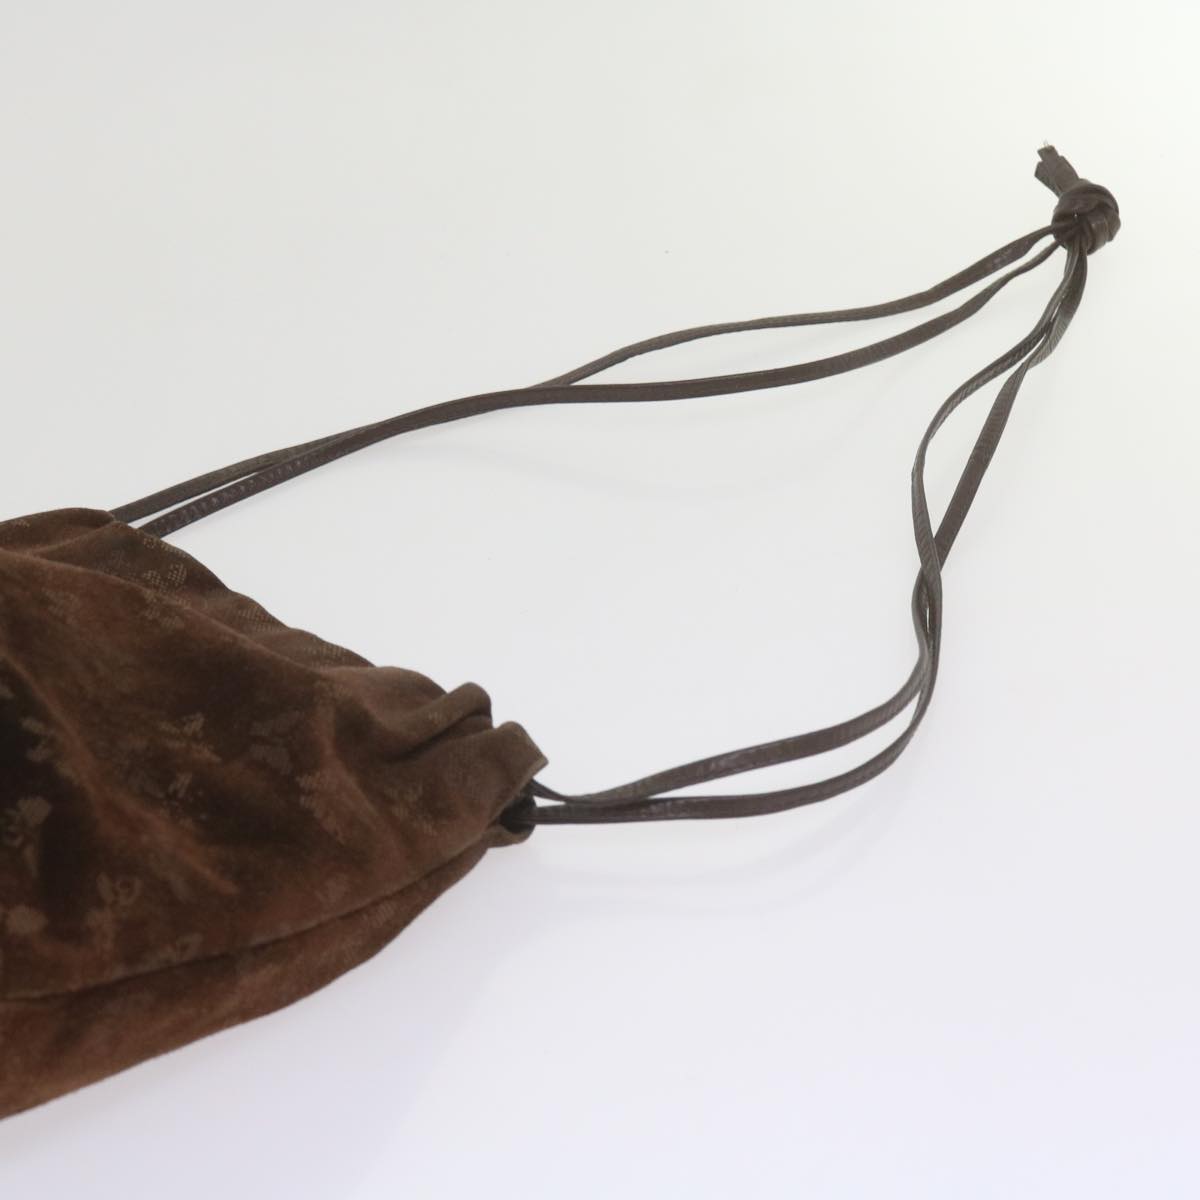 BOTTEGAVENETA Shoulder Bag Suede Brown Auth bs10611